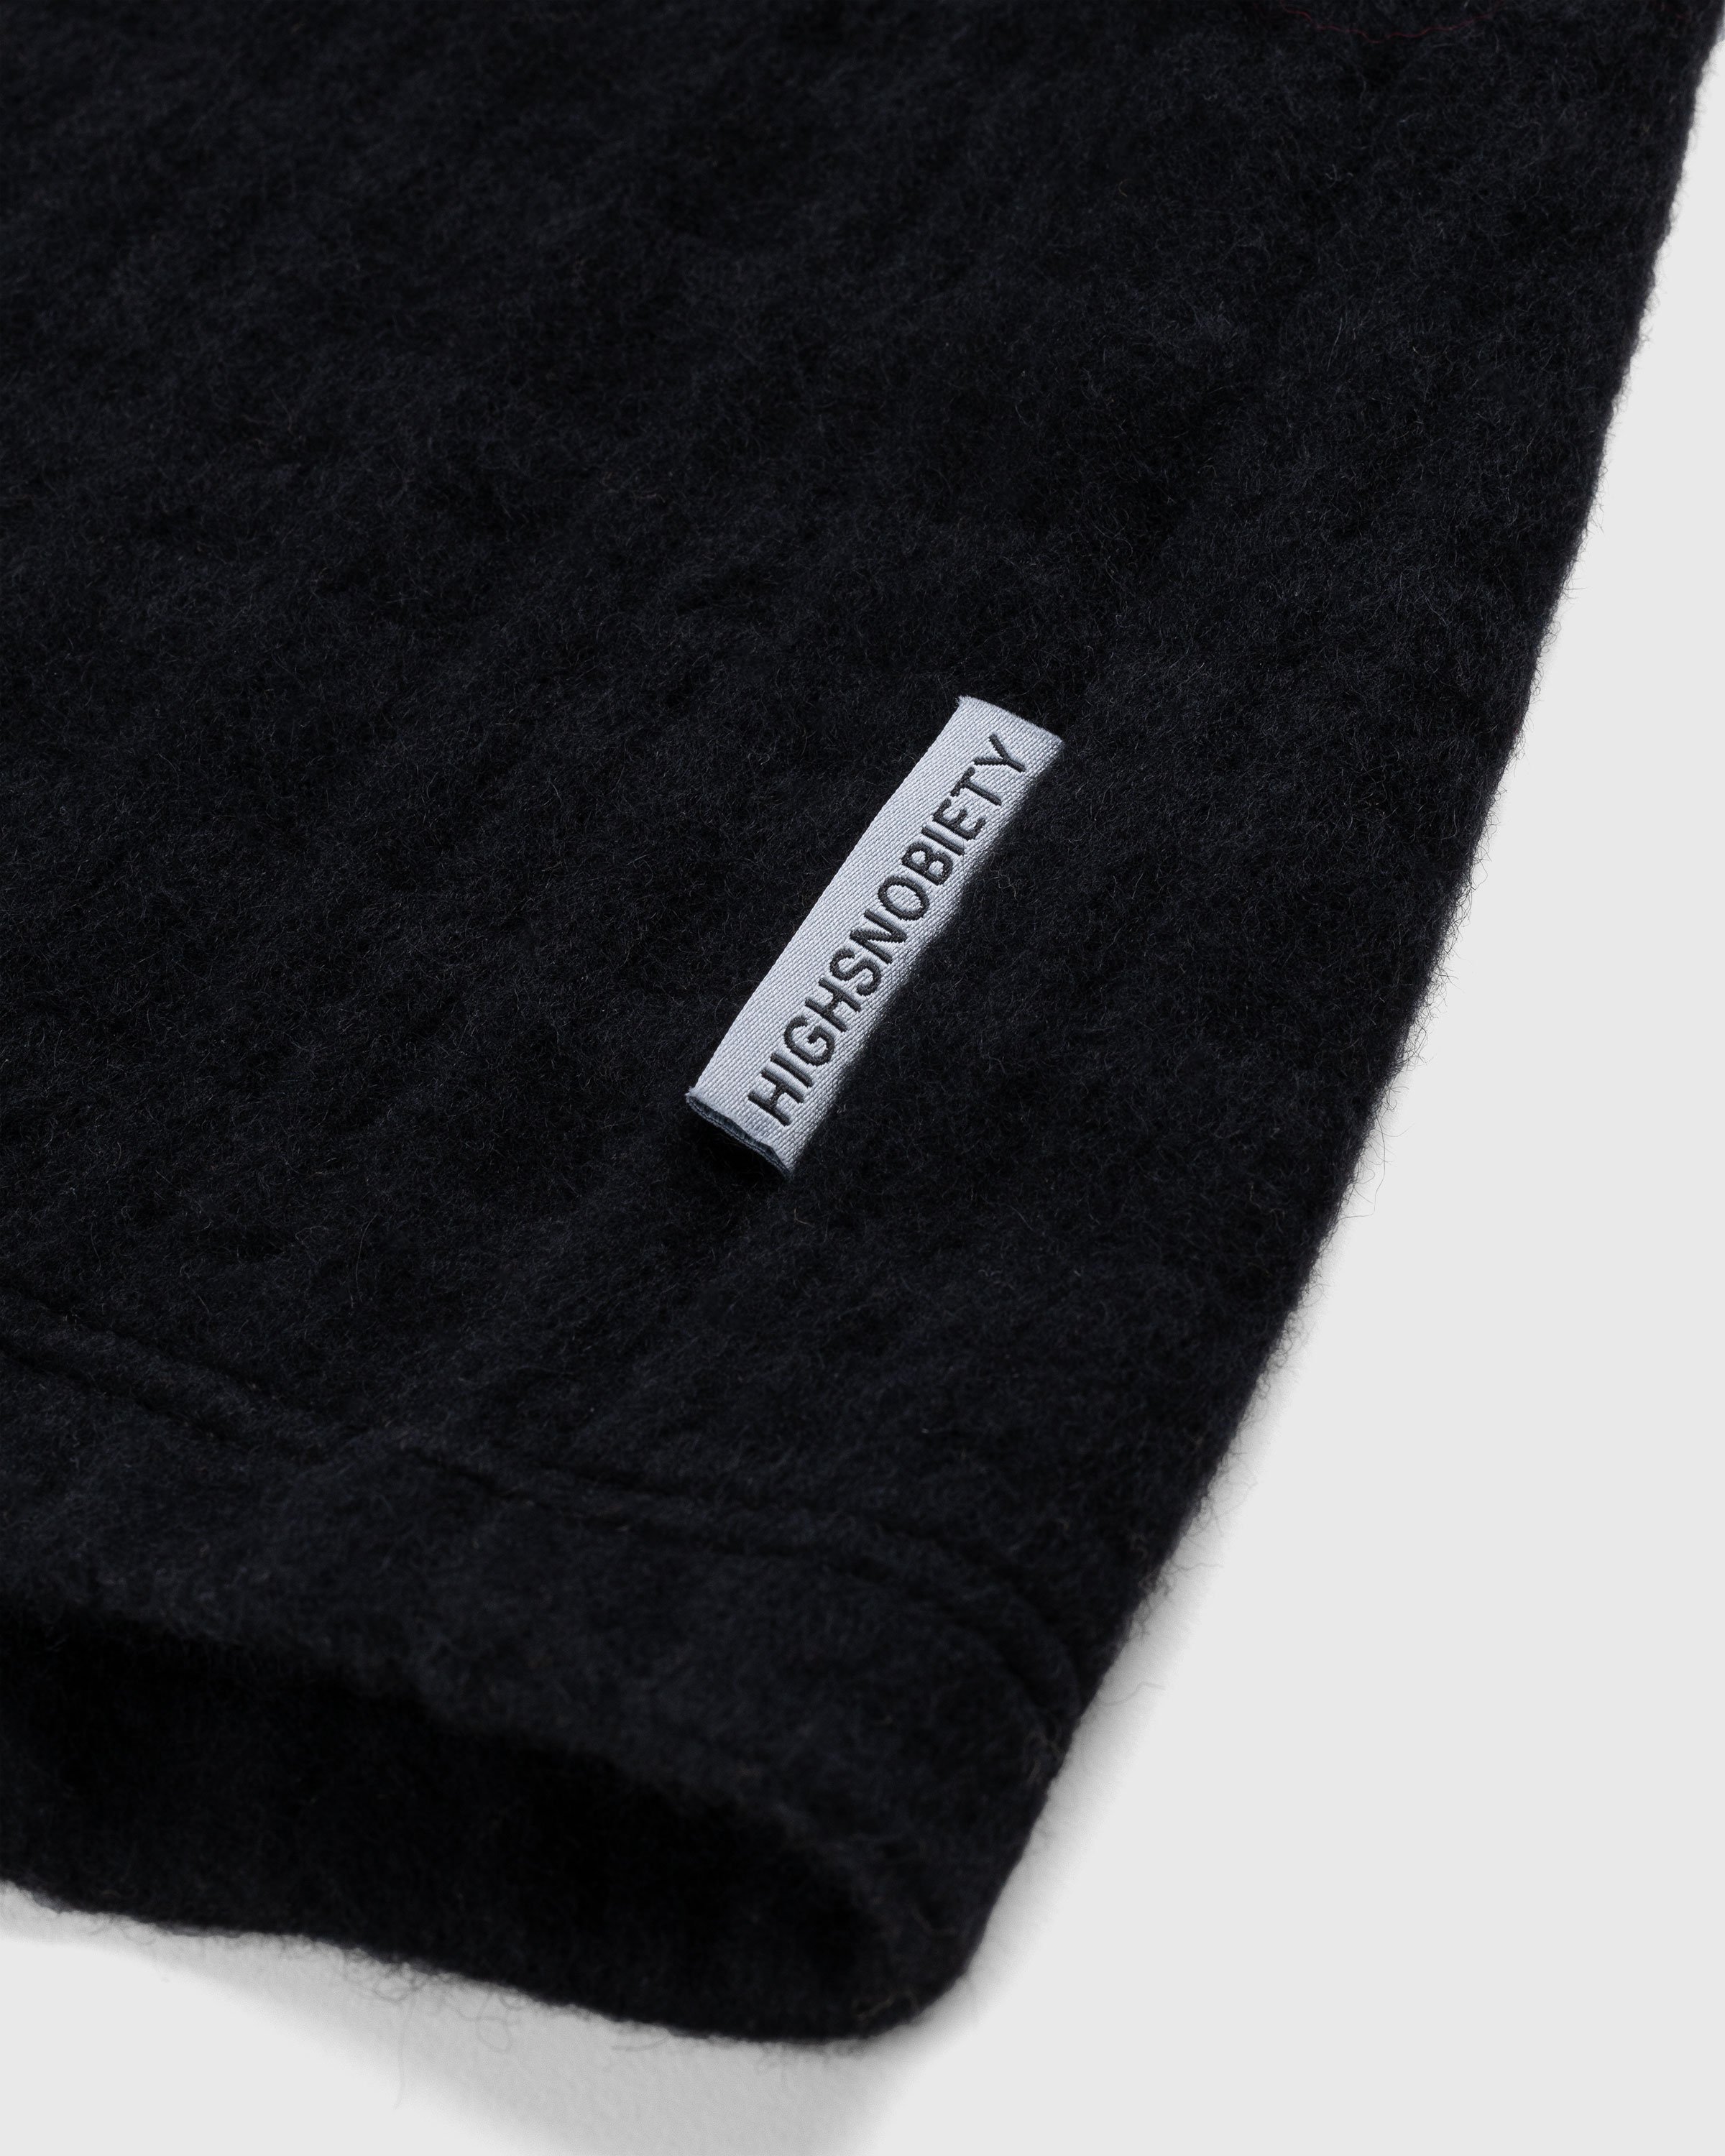 Highsnobiety HS05 - Recycle Wool Blend Fleece Quarter Zip Black - Clothing - Black - Image 7